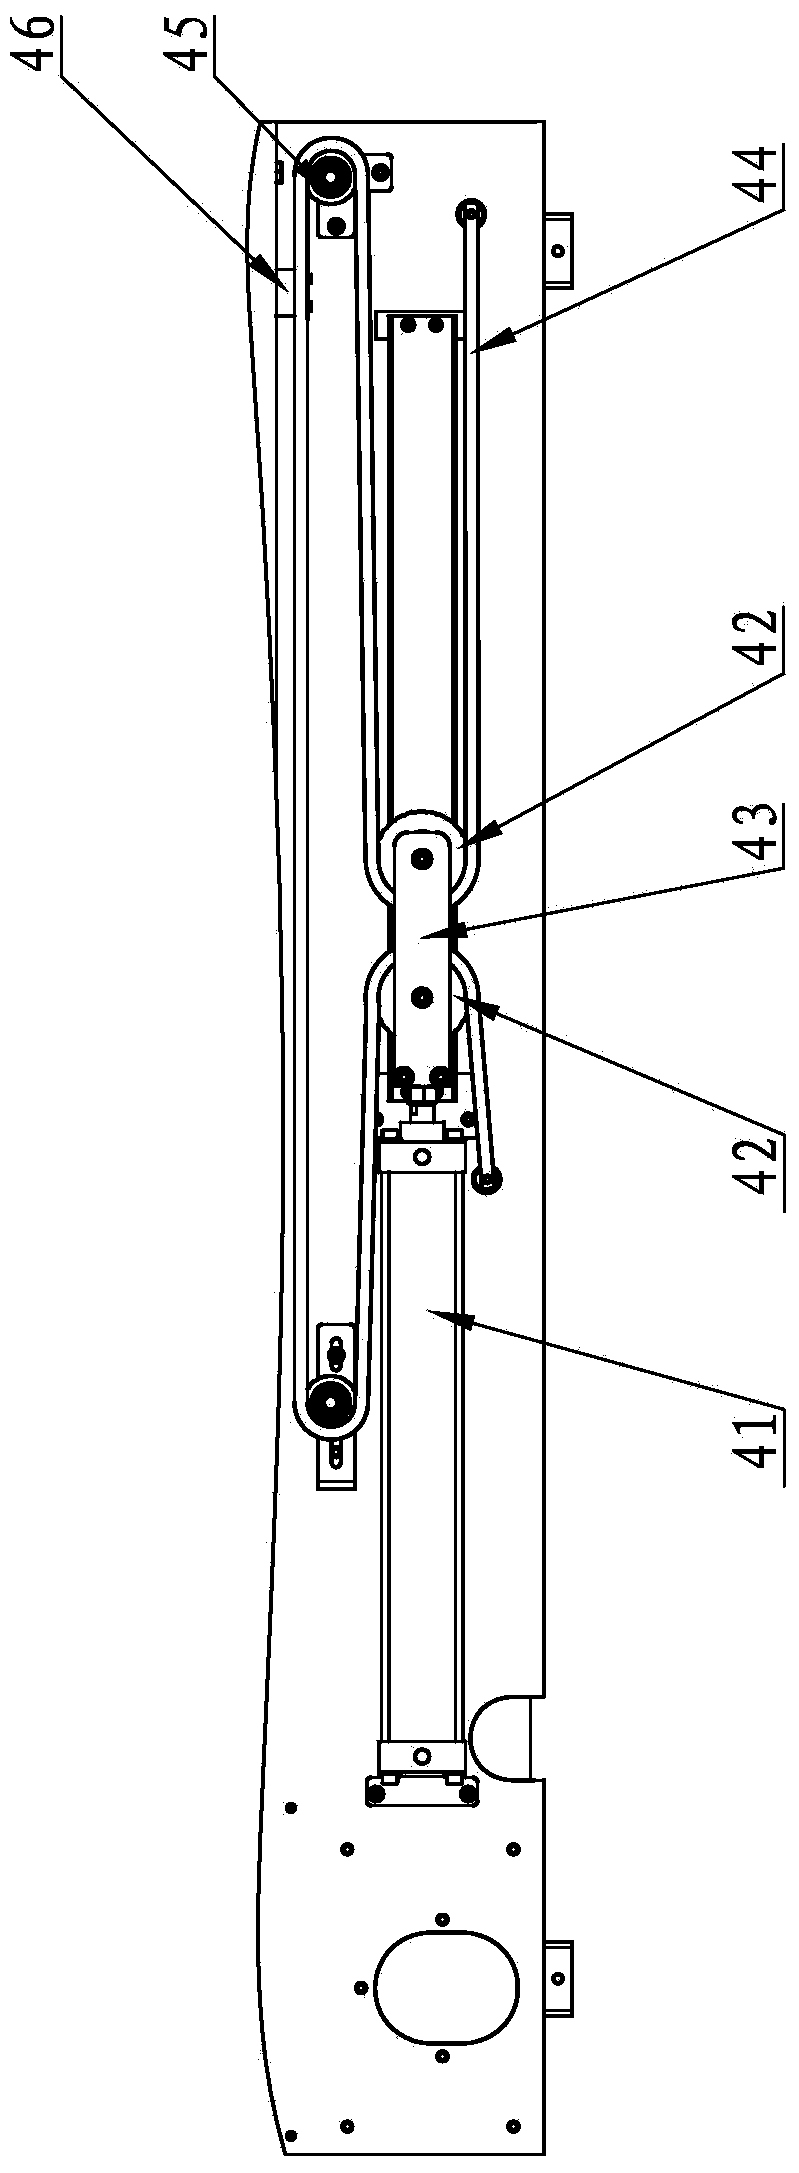 Creeling transmission mechanism for coiler of carding machine